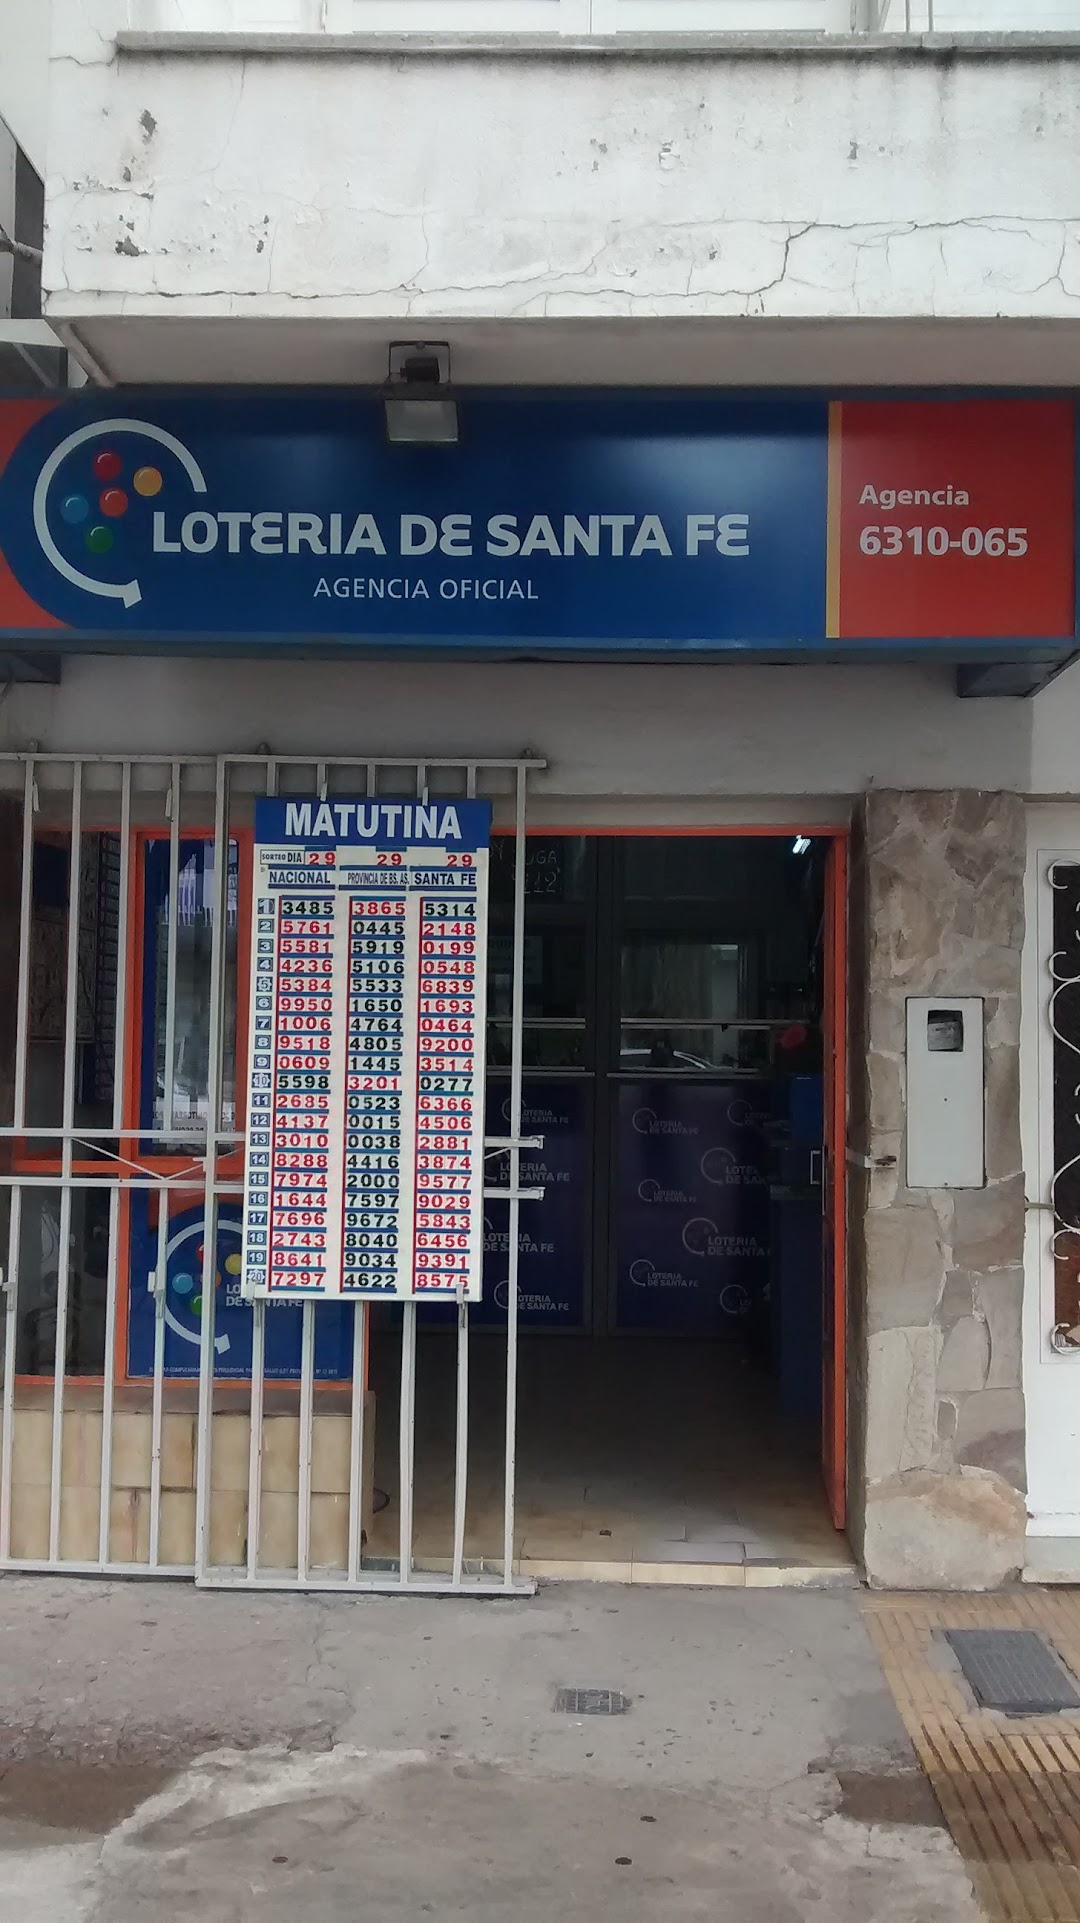 LOTERÍA DE SANTA FE Agencia 6310-065